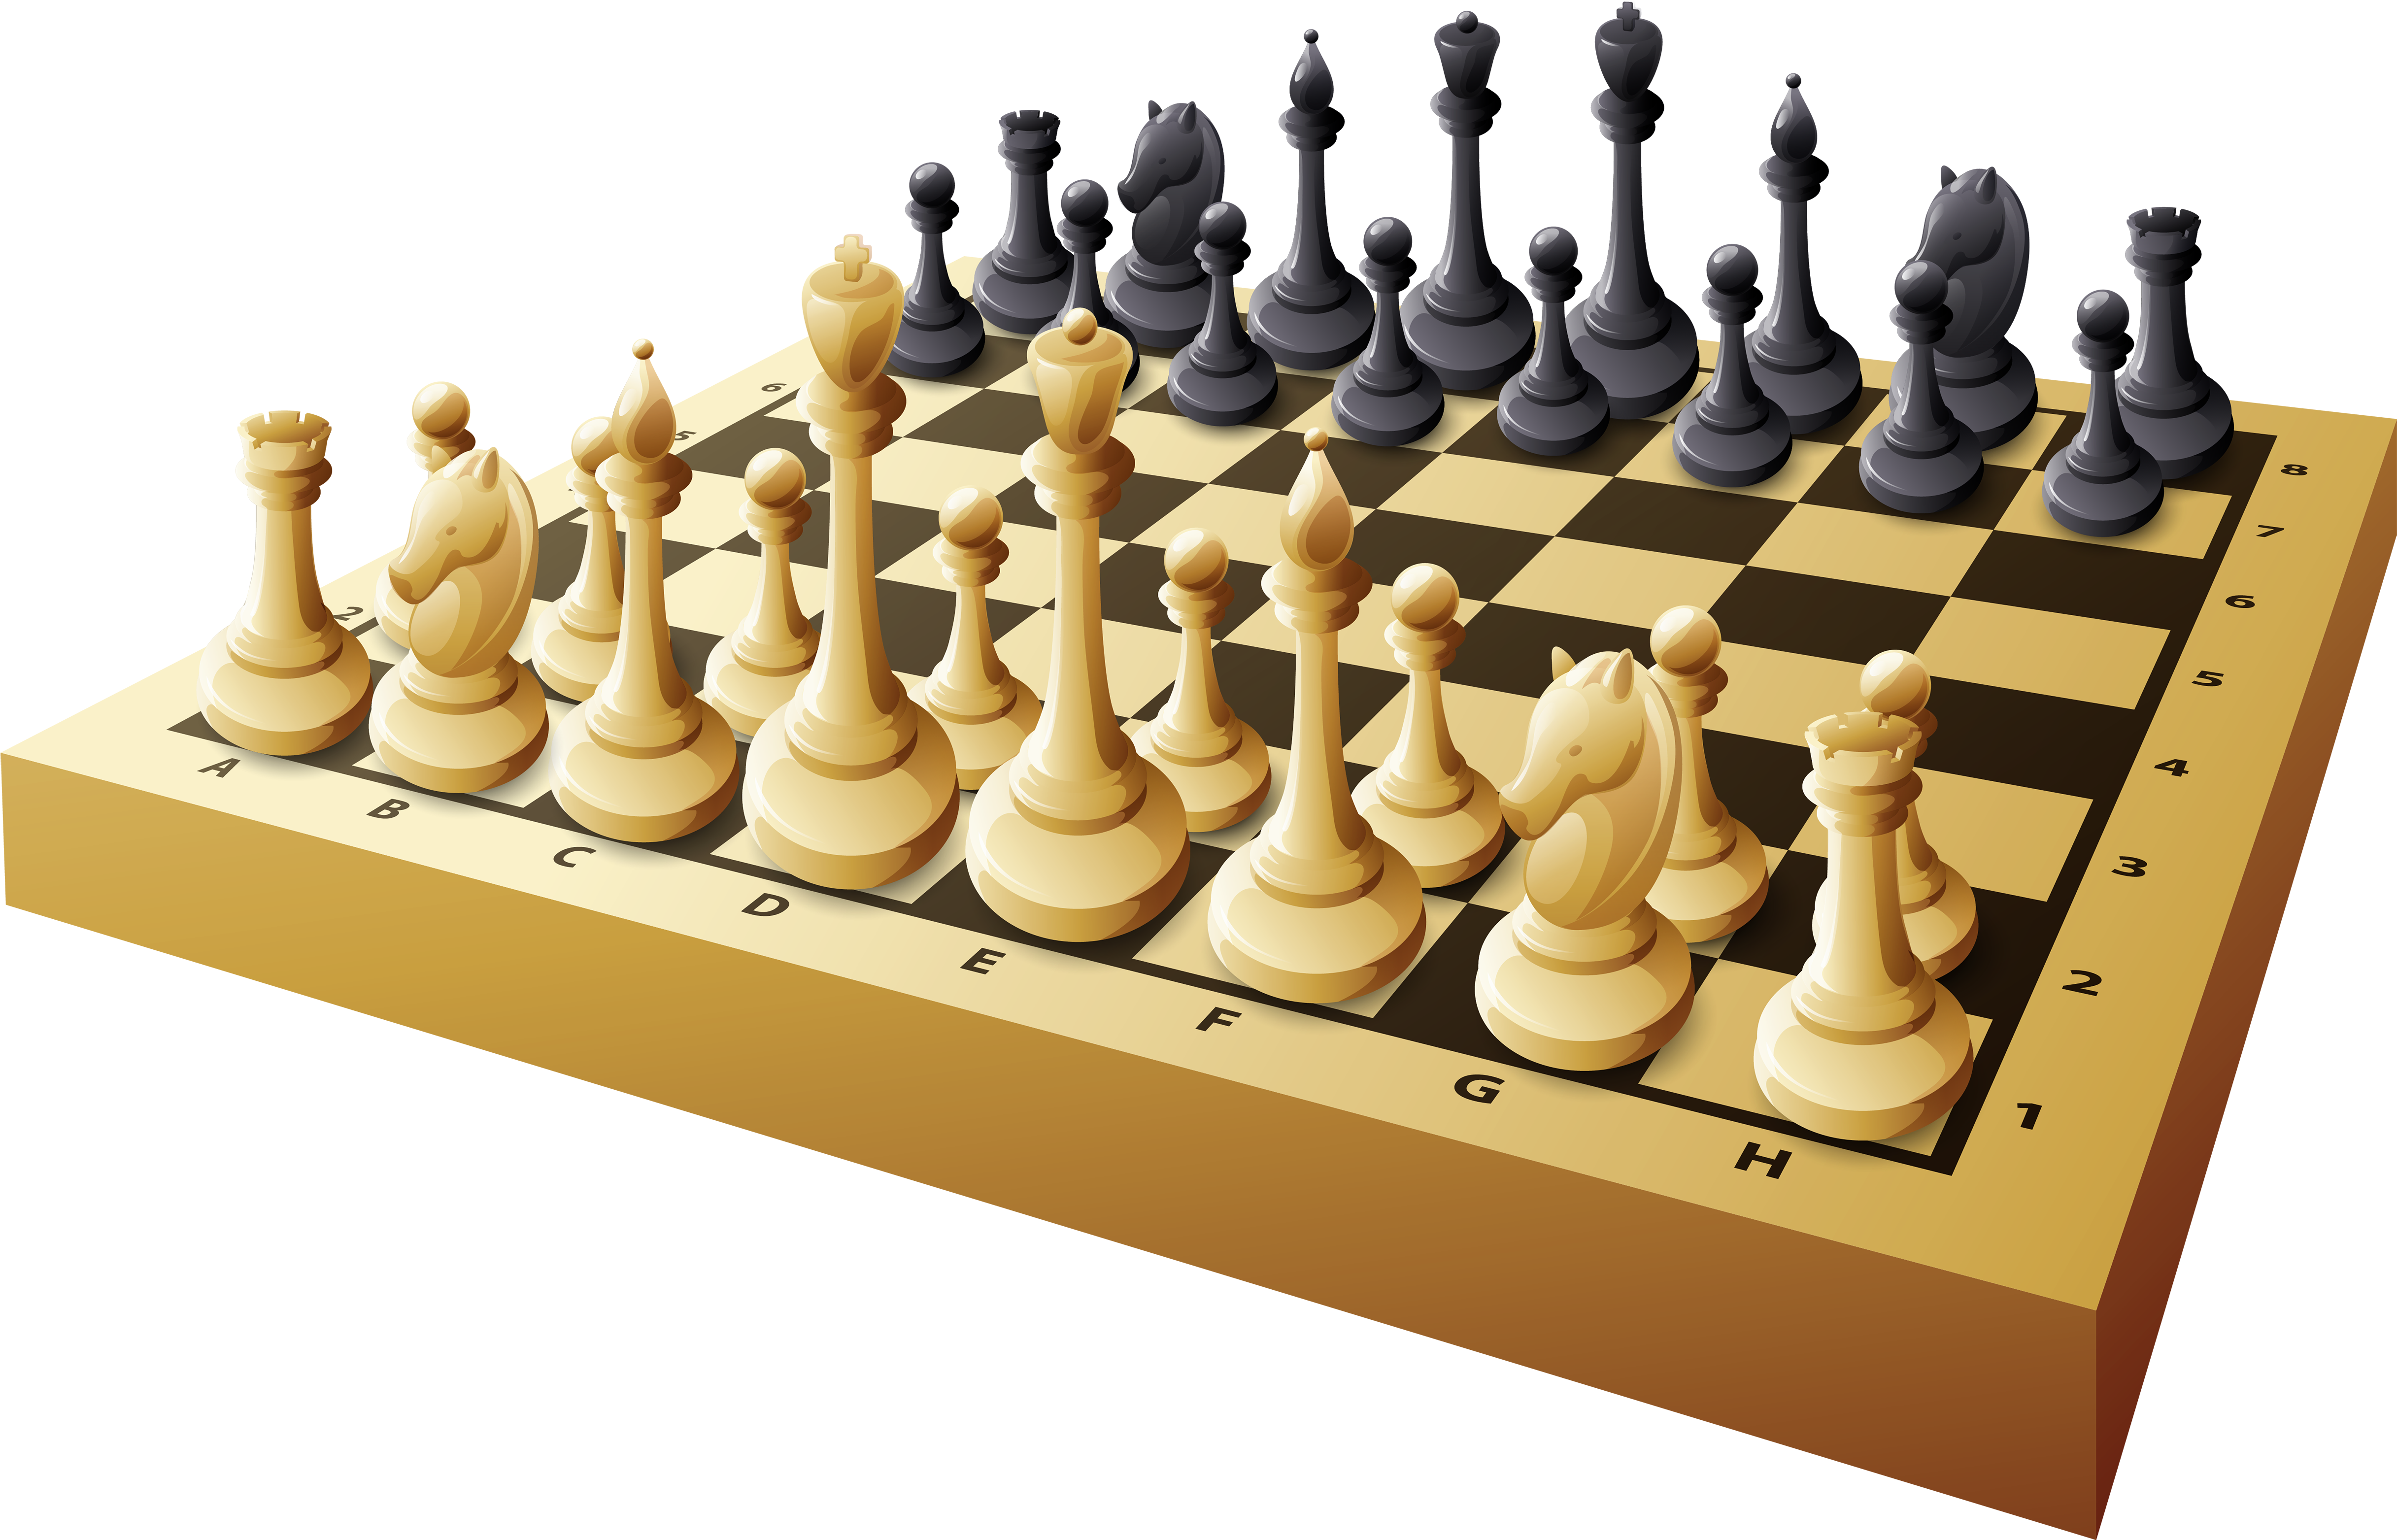 Chess Piece Chessboard Knight Clip Art - Chess Piece Chessboard Knight Clip Art (5000x3213)